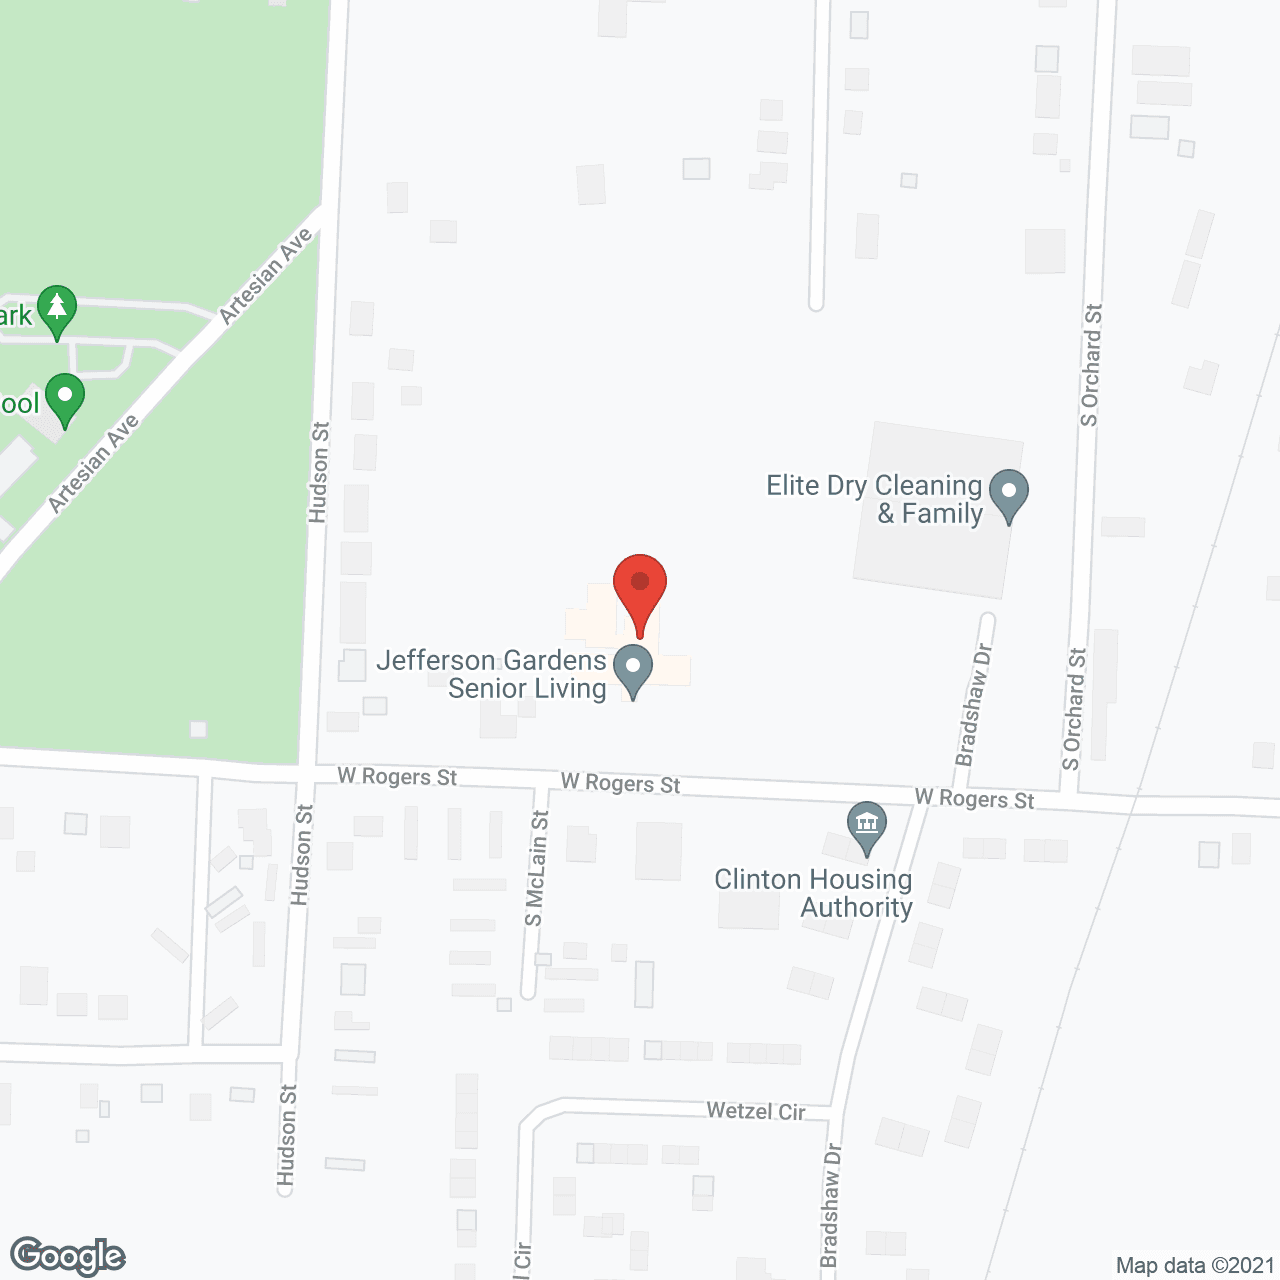 Jefferson Gardens in google map